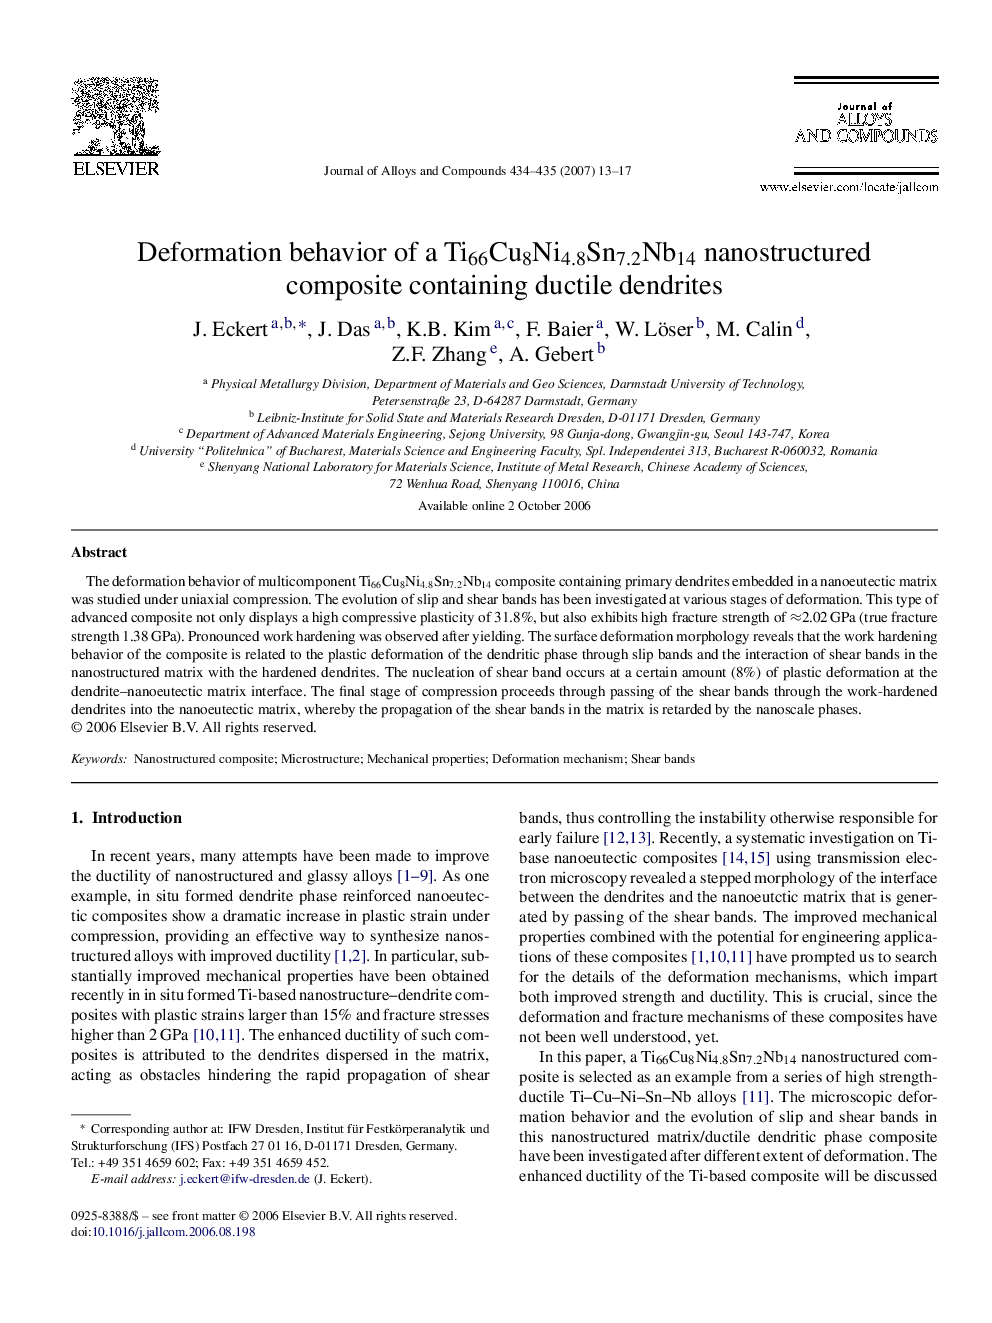 Deformation behavior of a Ti66Cu8Ni4.8Sn7.2Nb14 nanostructured composite containing ductile dendrites